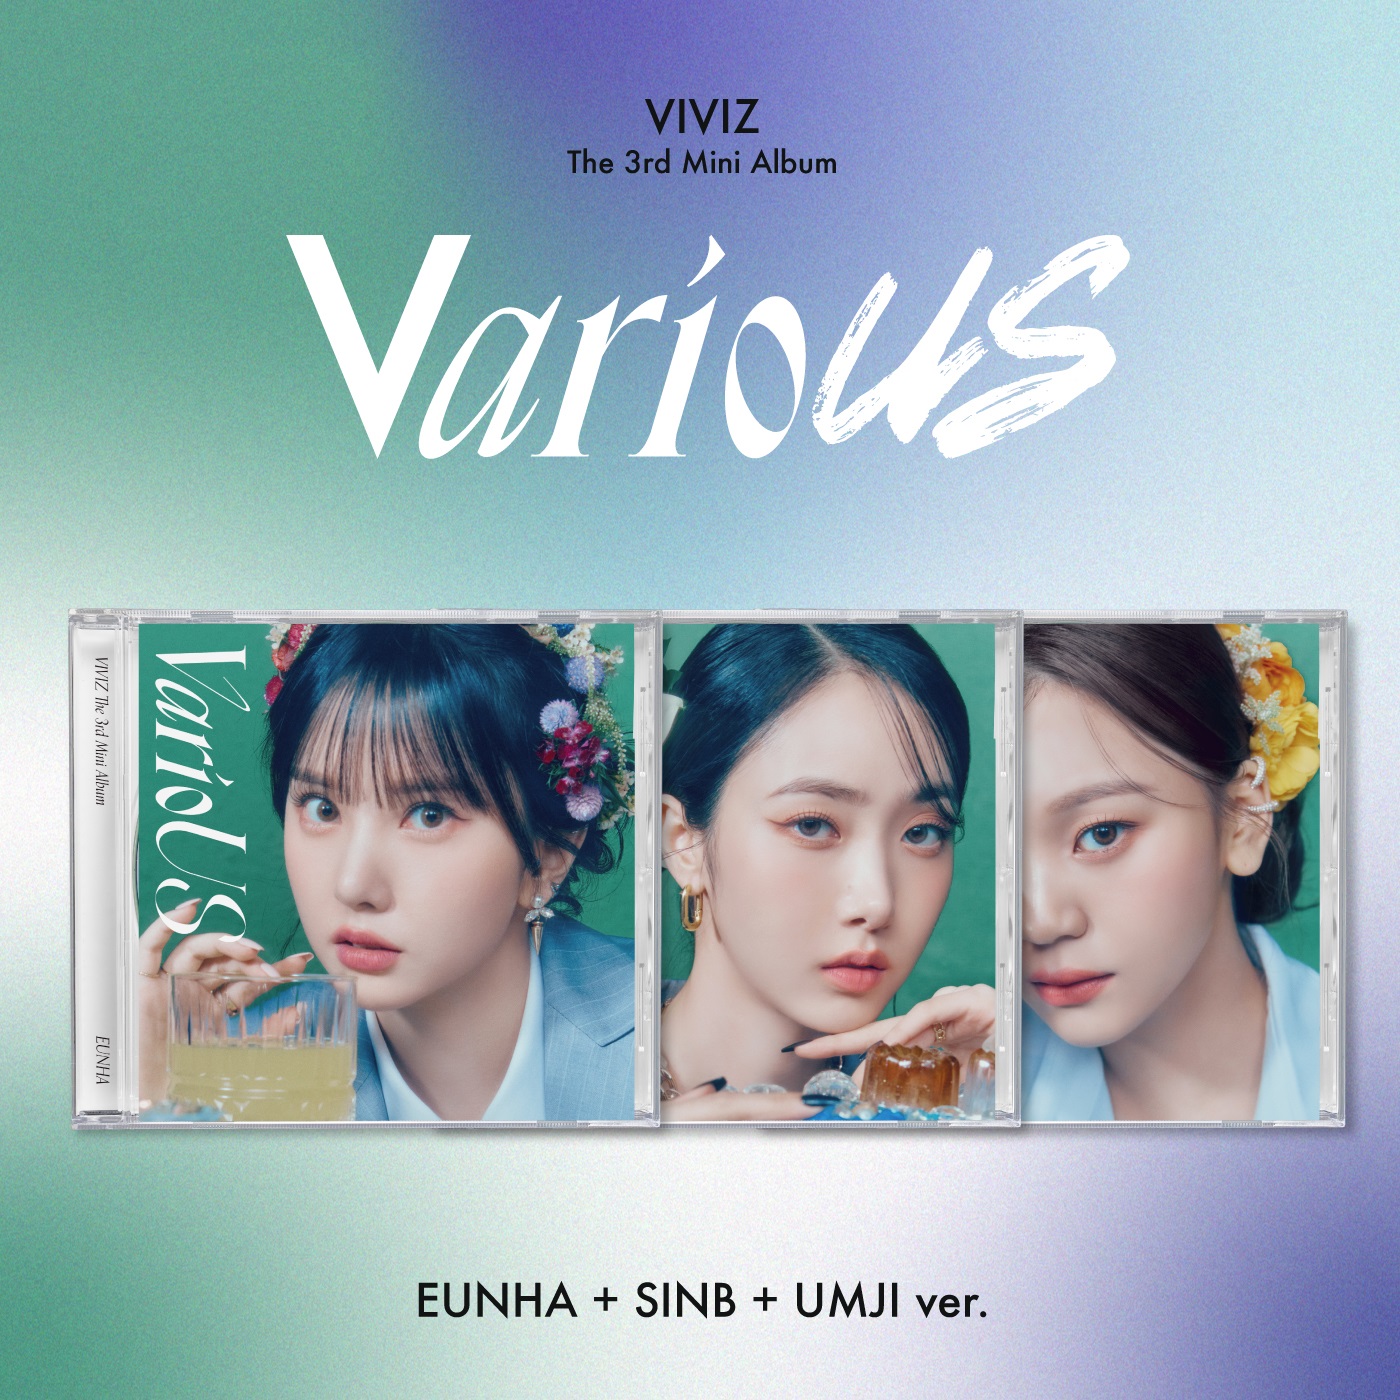 [3CD SET] VIVIZ - 3rd Mini Album [VarioUS] (Jewel Case) (EUNHA ver. + SINB ver. + UMJI ver.)